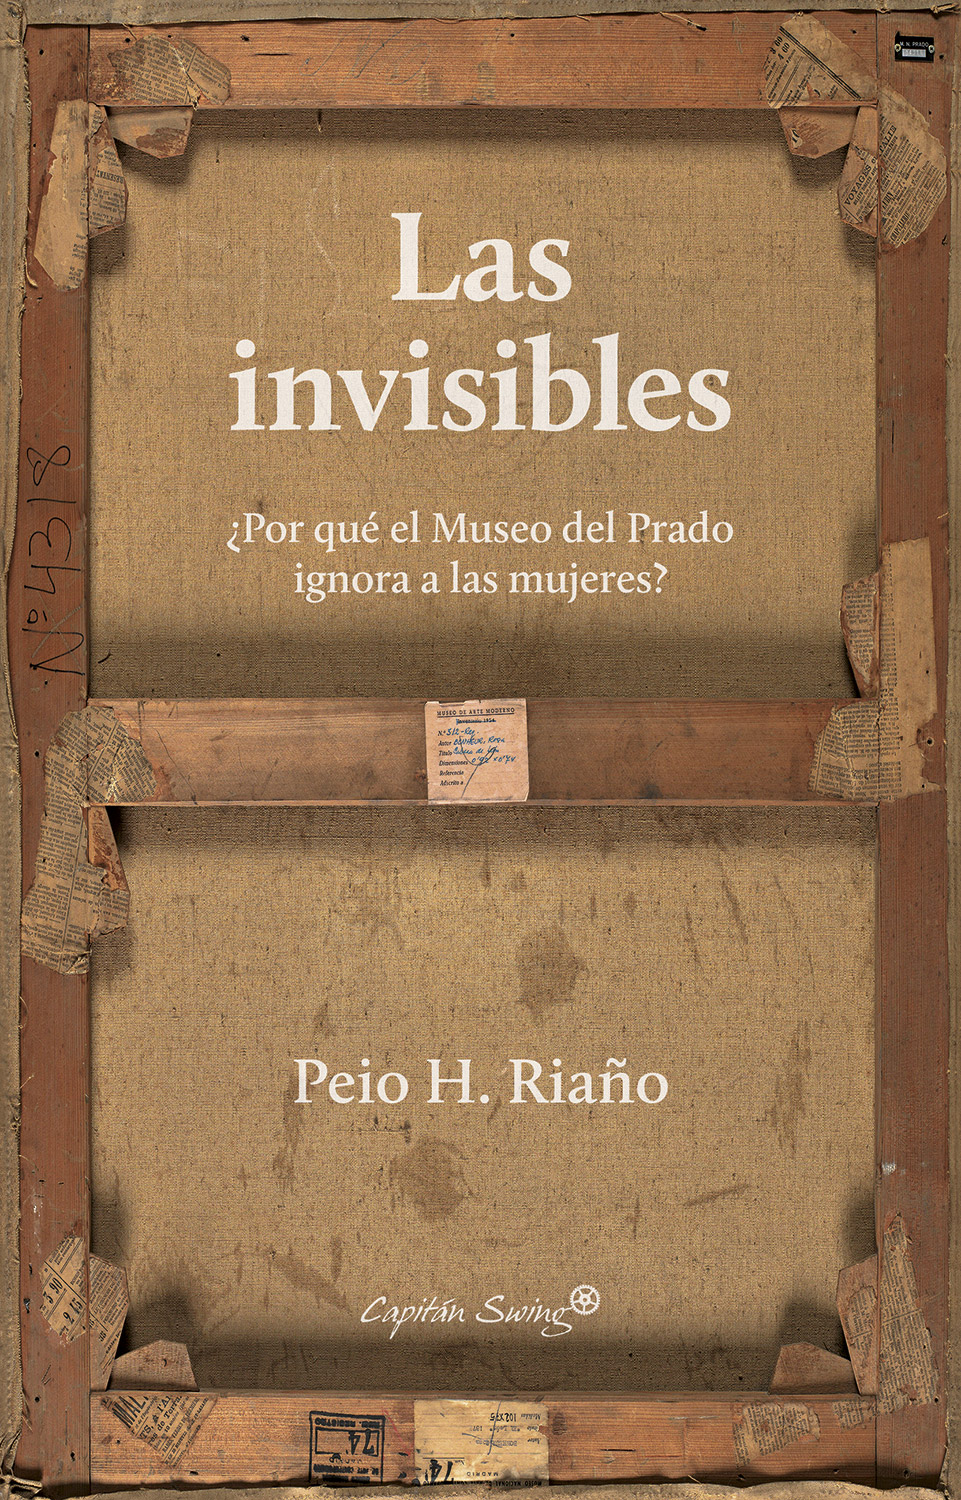 PEIO H. RIAÑO. Las invisibles (Capitán Swing). APLAZADO 